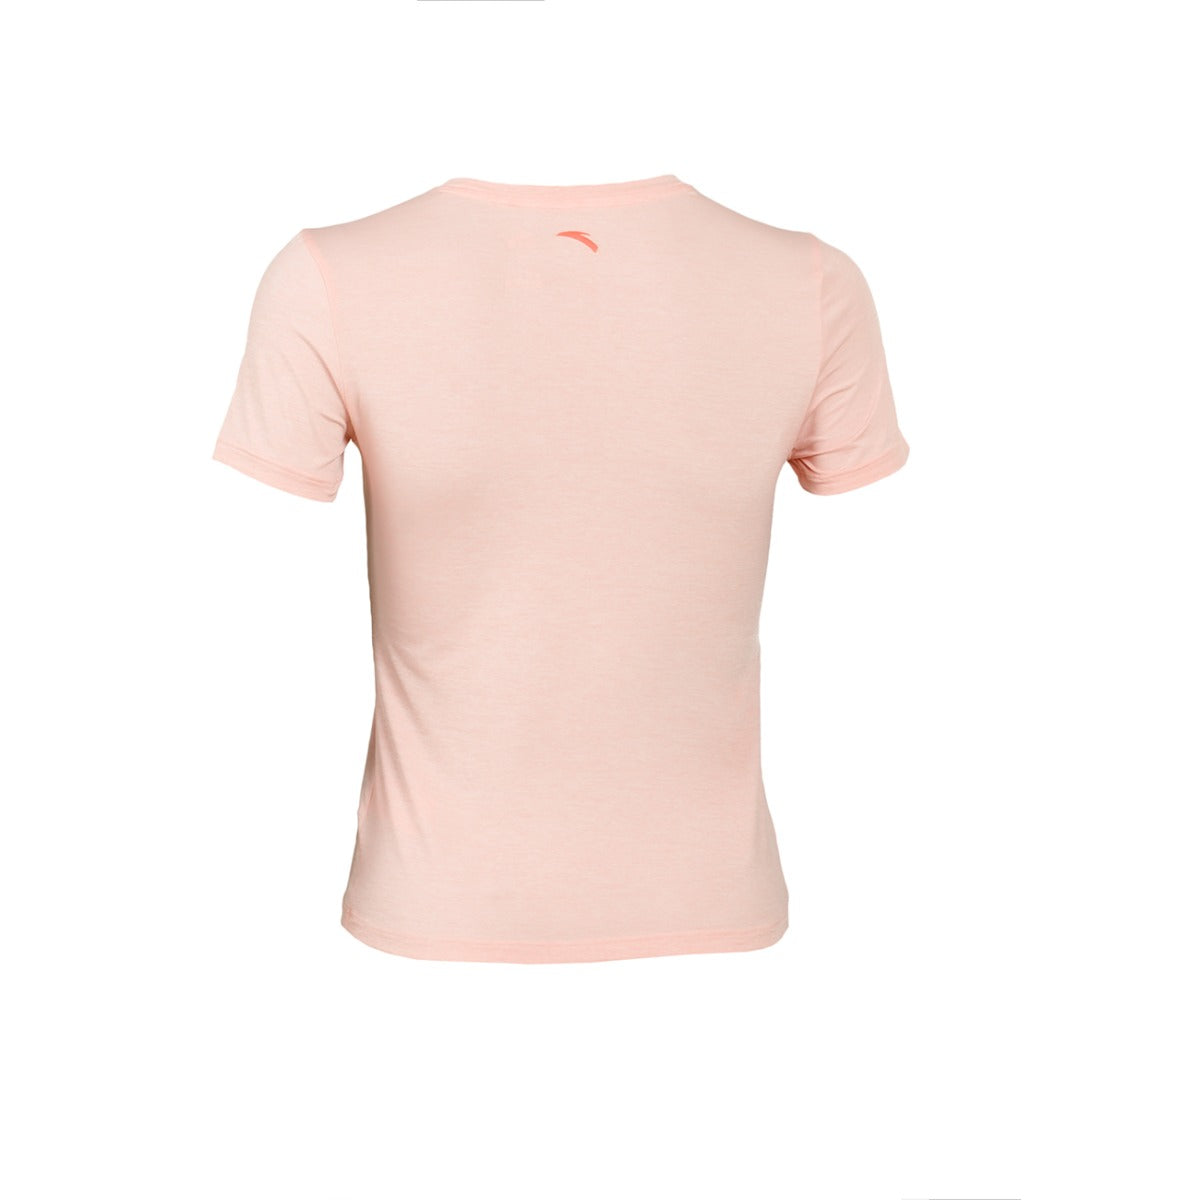 Anta SS Tee Cotton T-Shirt For Women, Rose